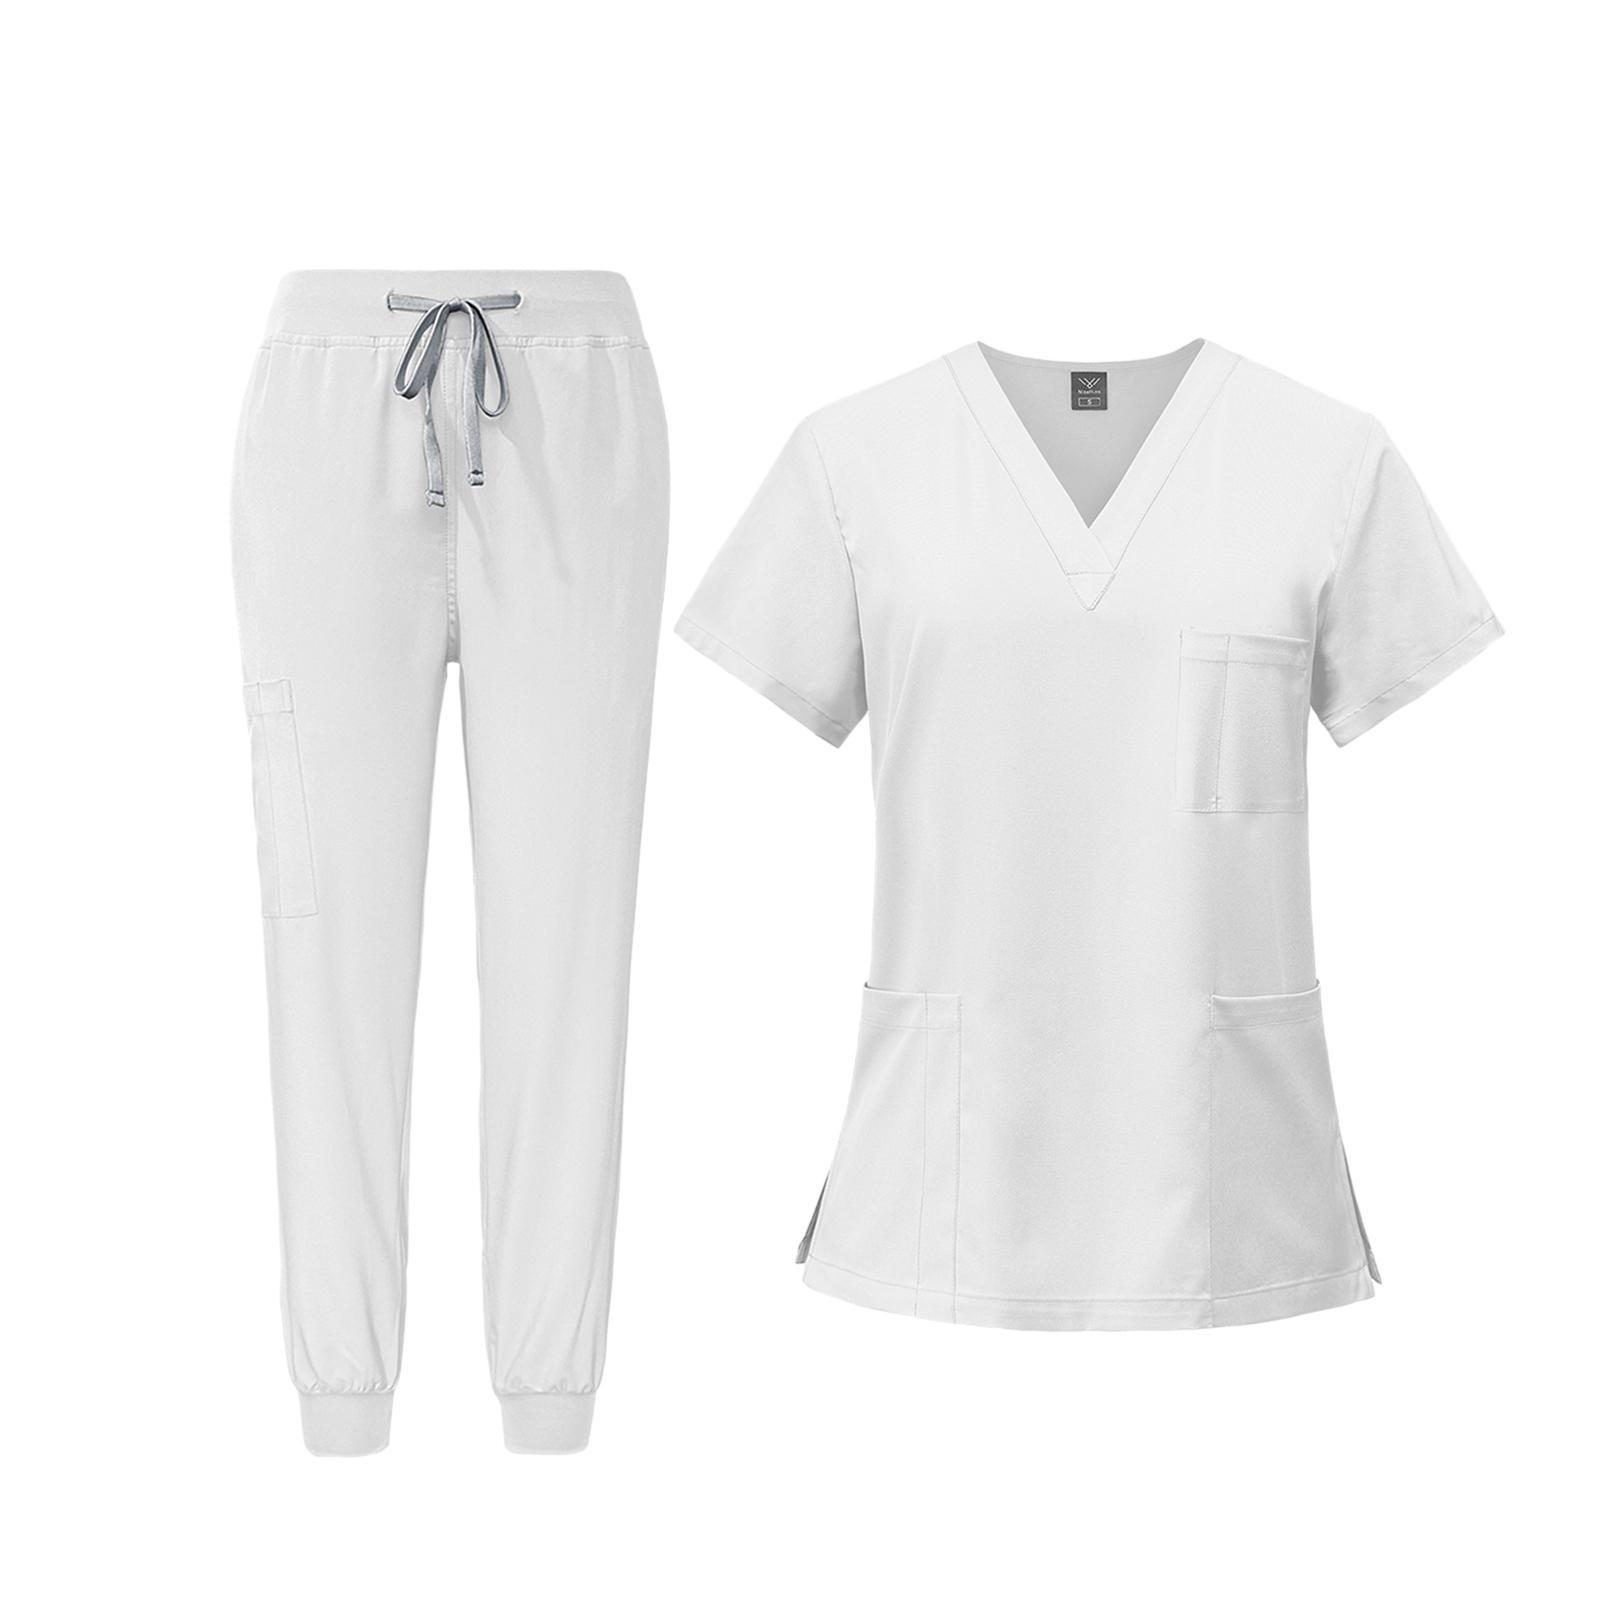 Nursing Uniforms Beauty Salon Shop V Neck T Shirts Women Scrubs Sets